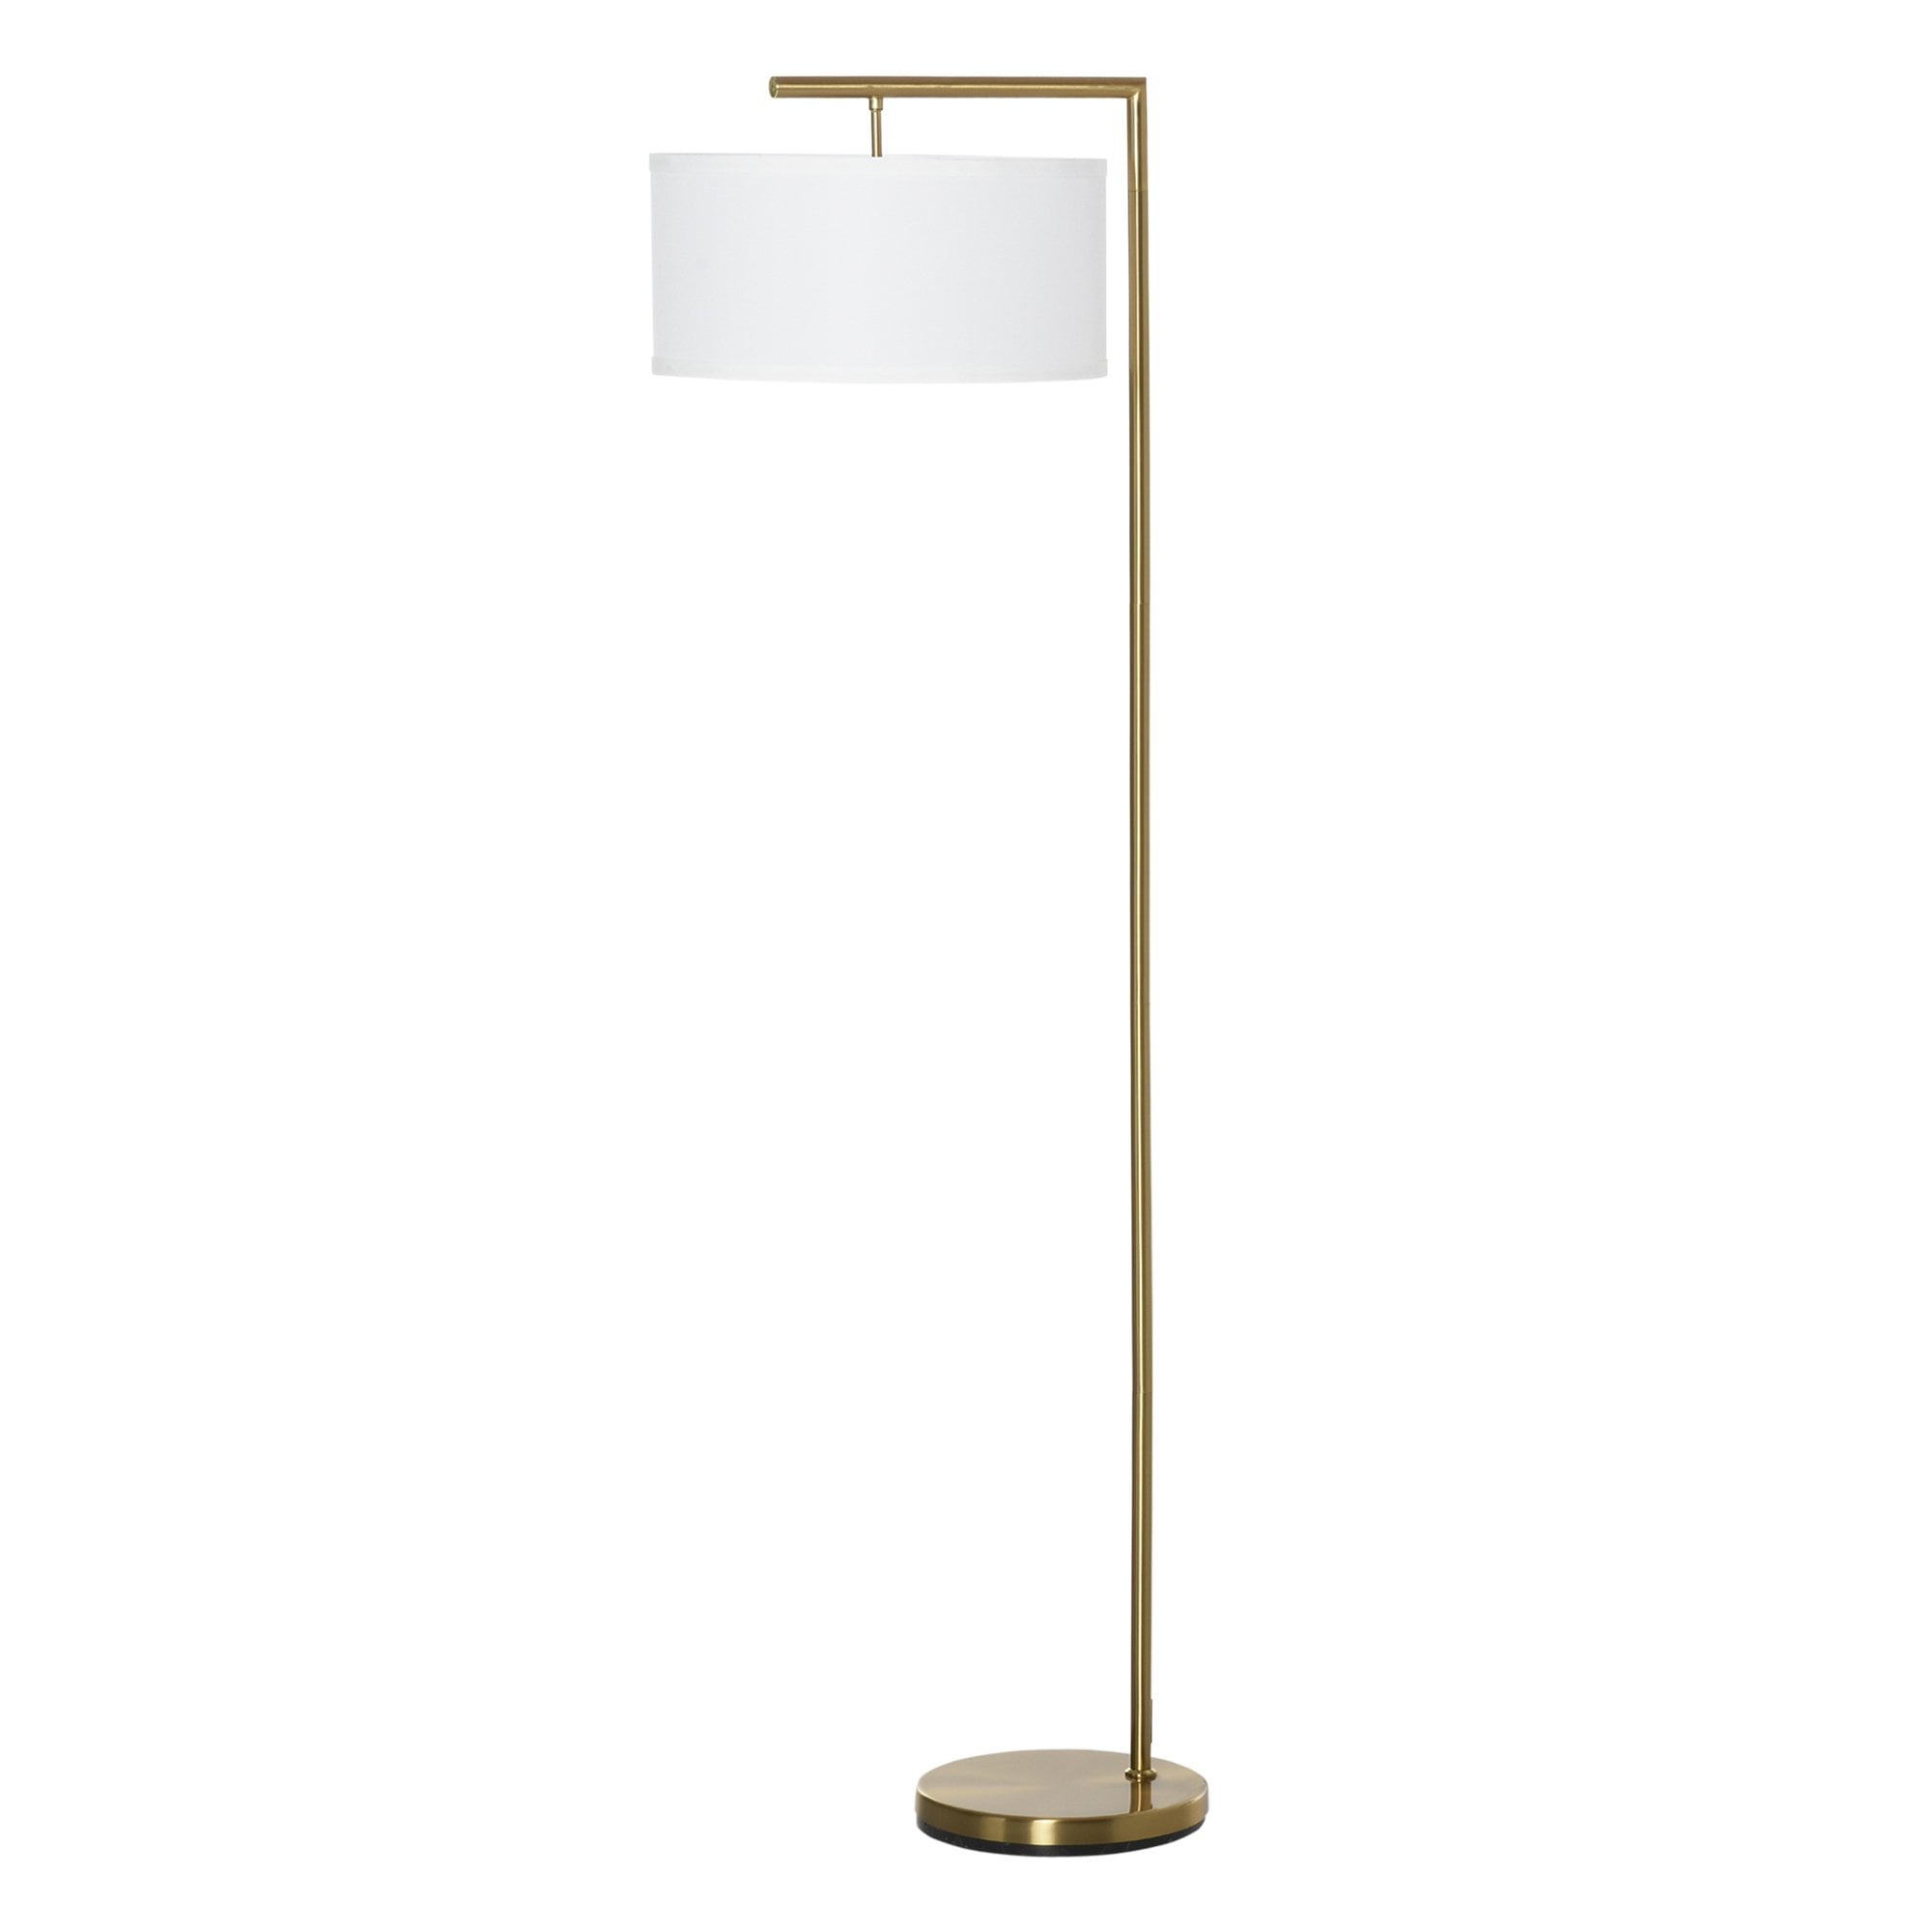 HOMCOM Floor Lamp - Modern Standing Light with Linen Lampshade - Round Base for Living Room - Bedroom - Dining Room - Gold and White Lampshade Room Be